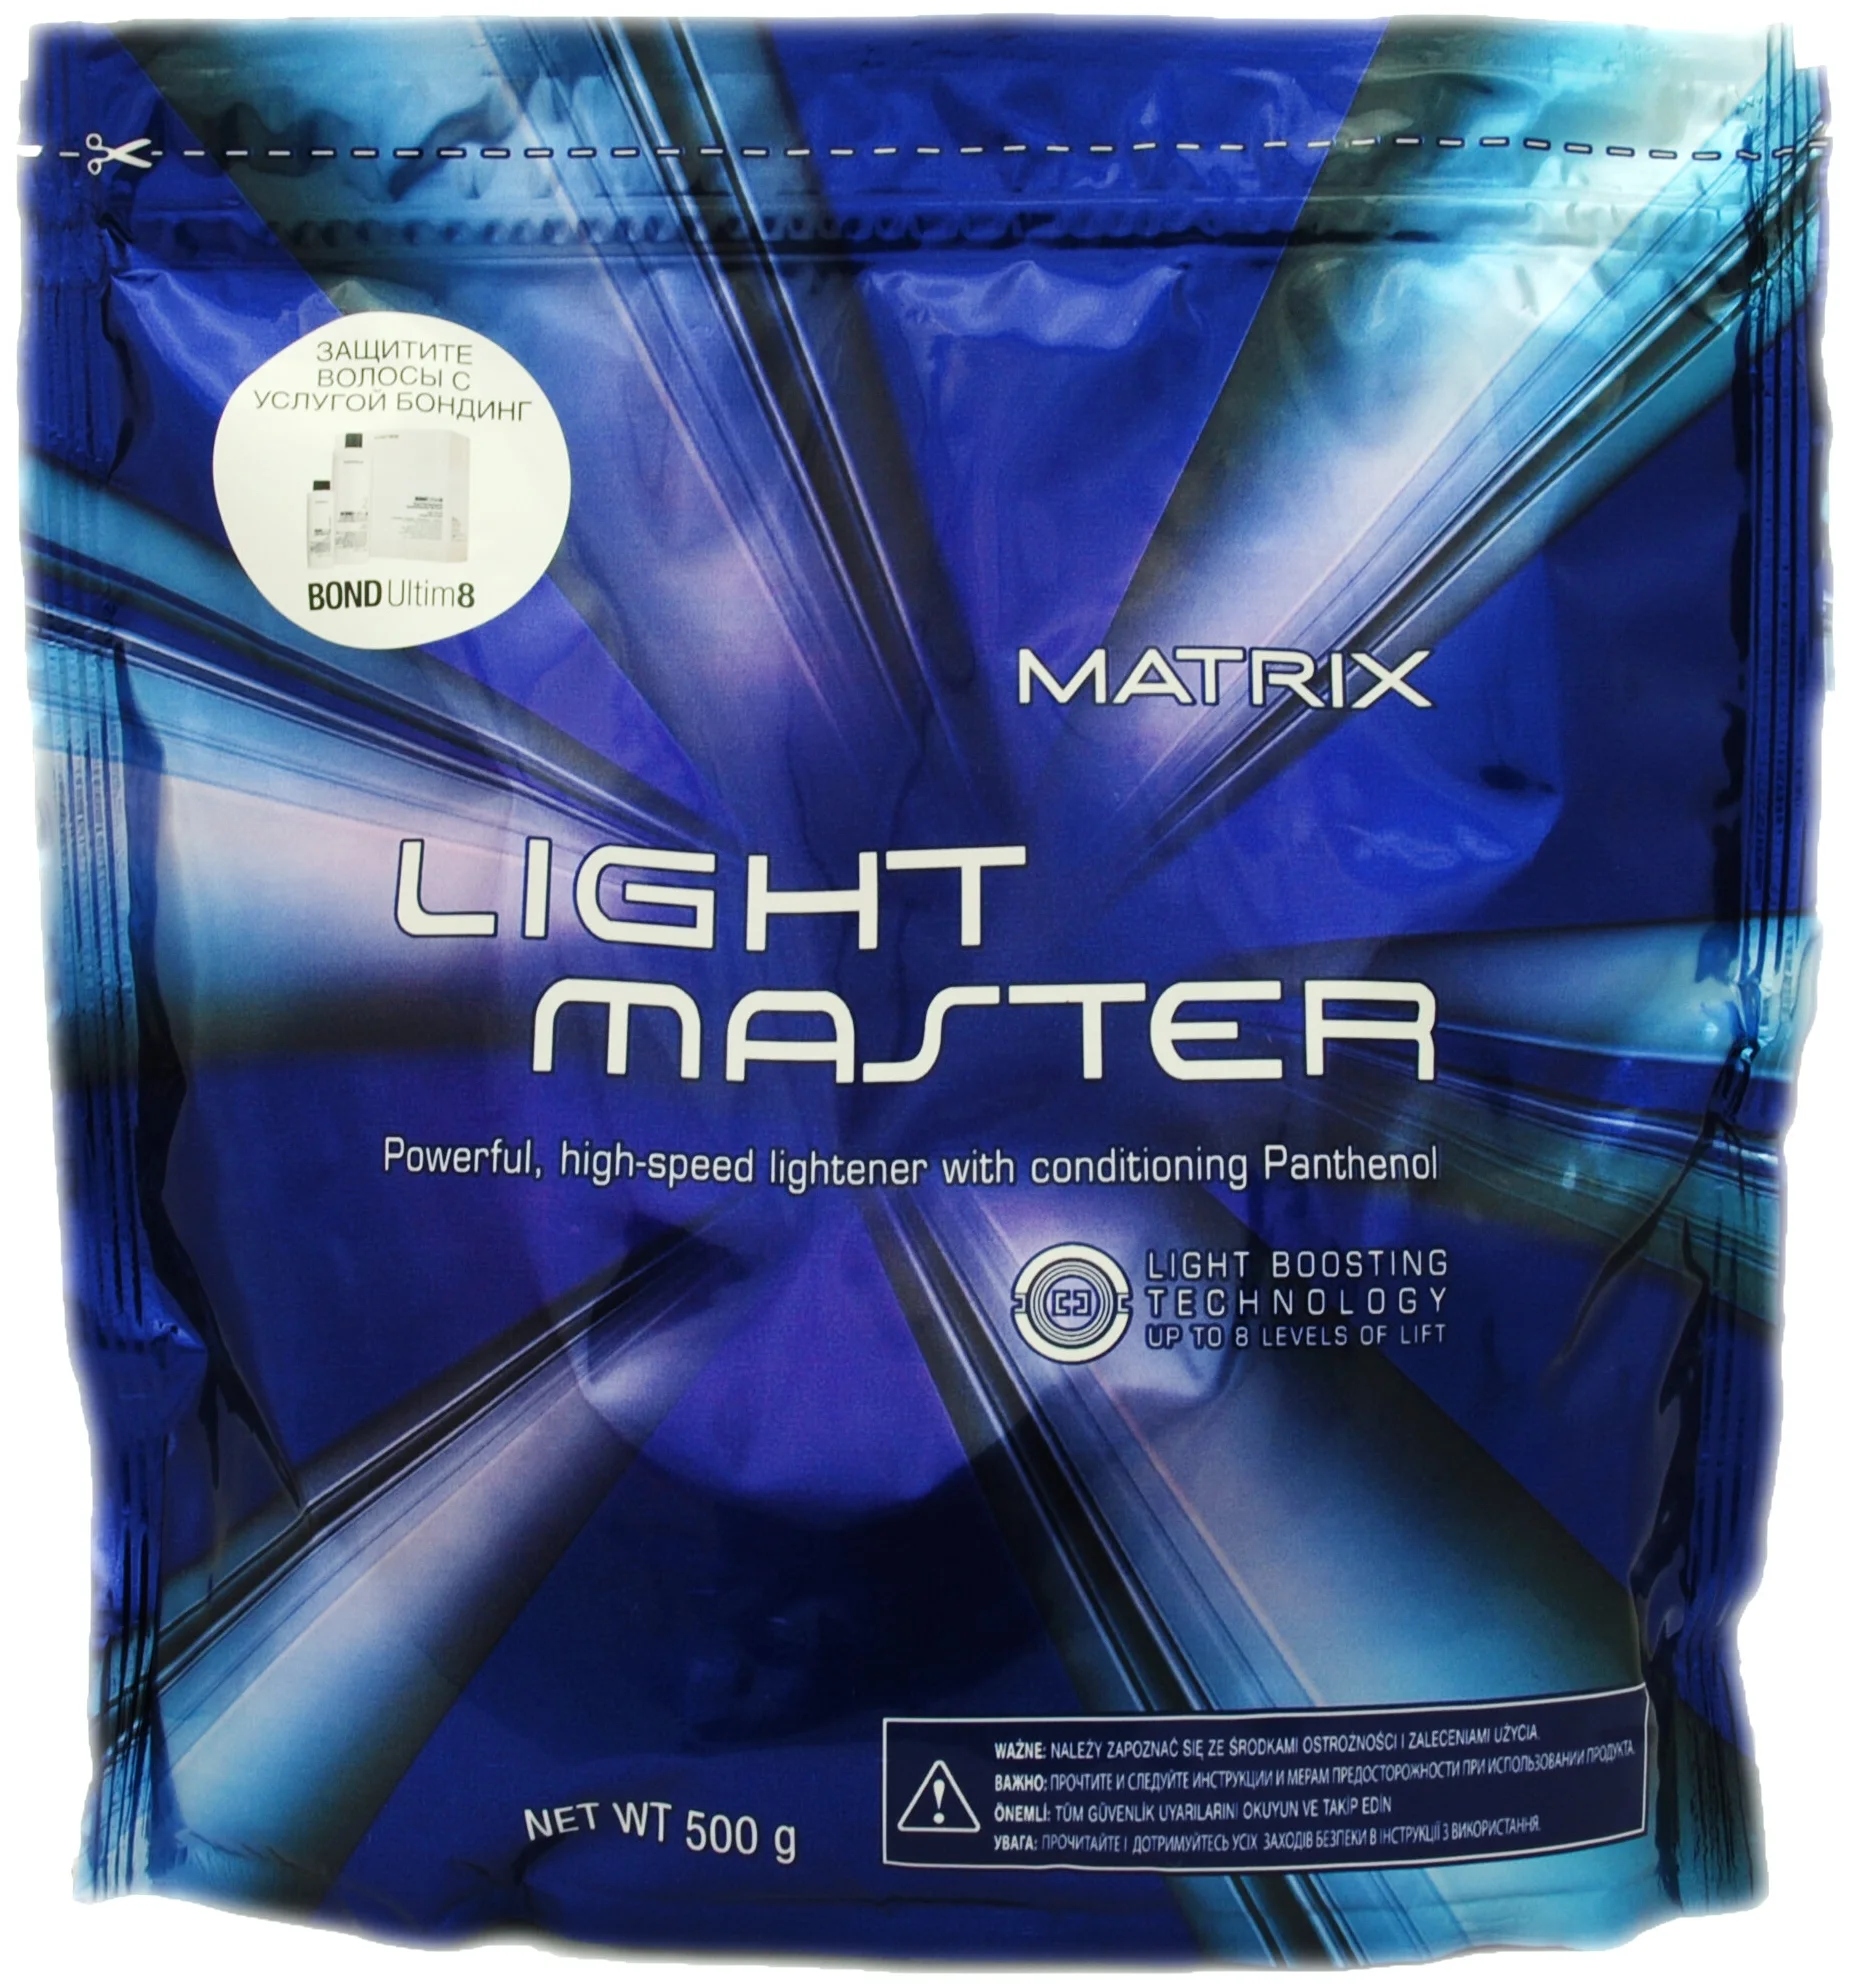 Matrix Light Master - текстура: порошок